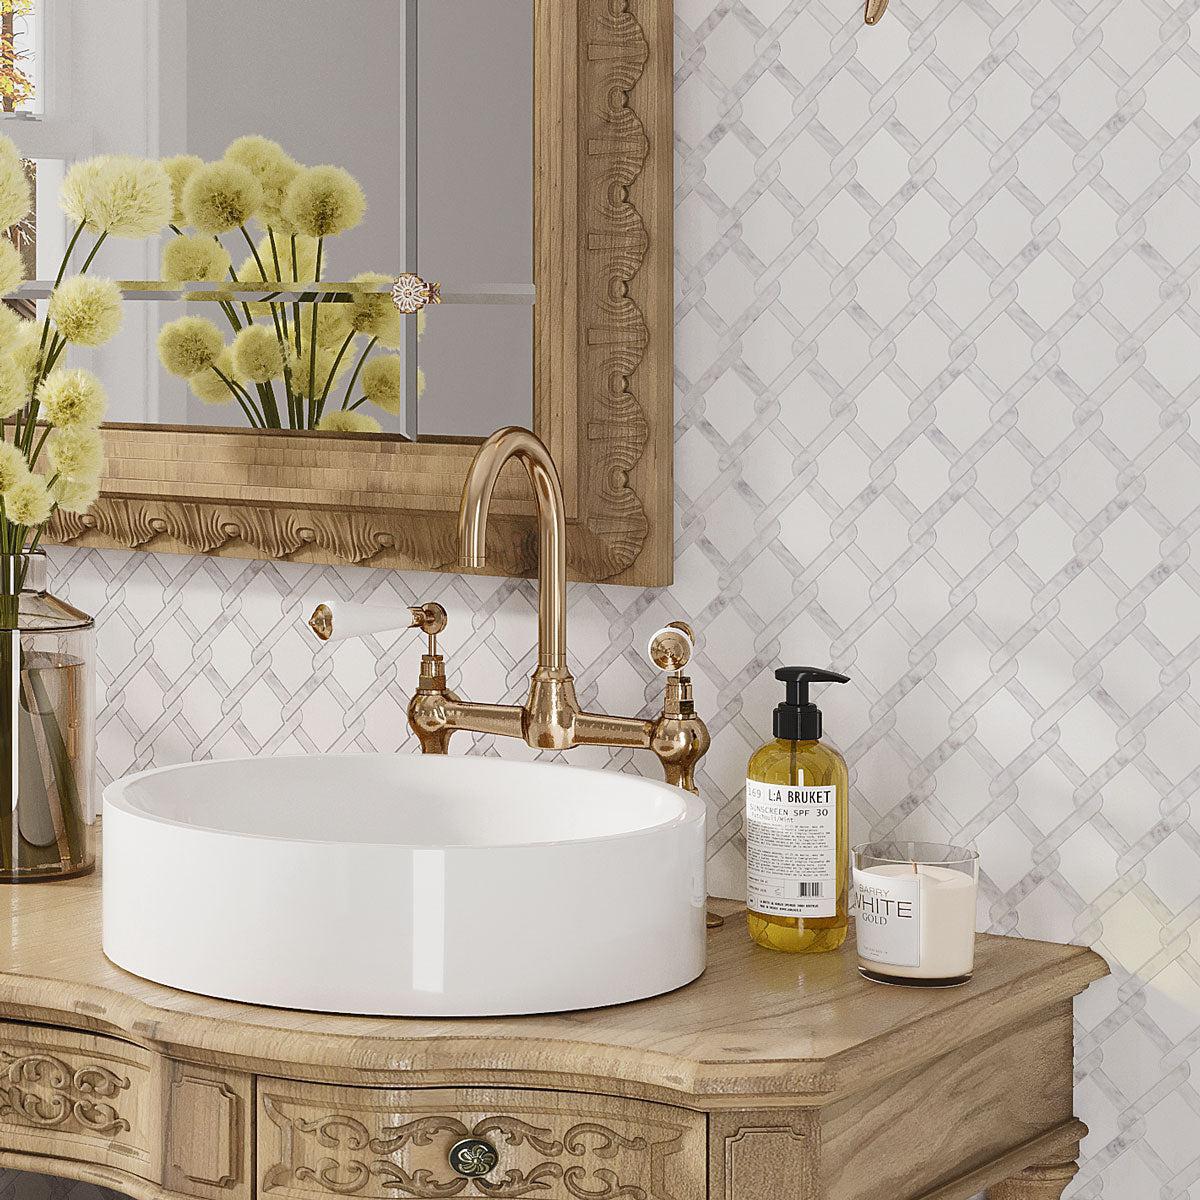 Italiano White Marble Mosaic Tile Bathroom Wall Tile Treatment